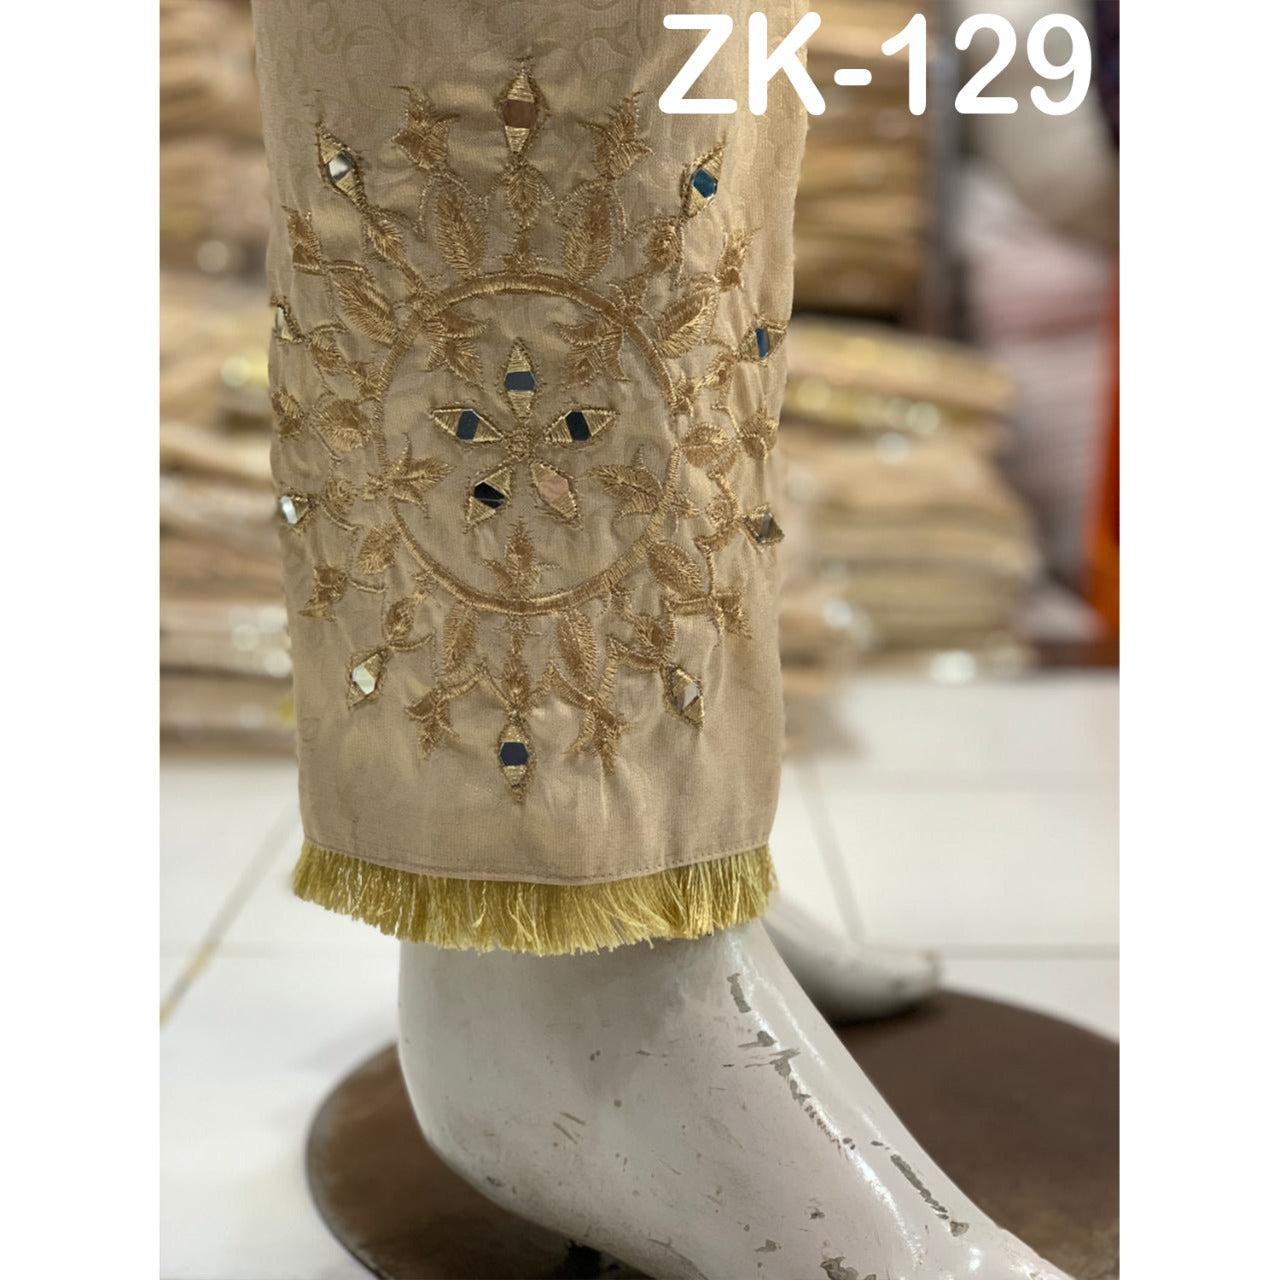 Stylish maysuri with mirror trouser for women (ZK-129) RGshop